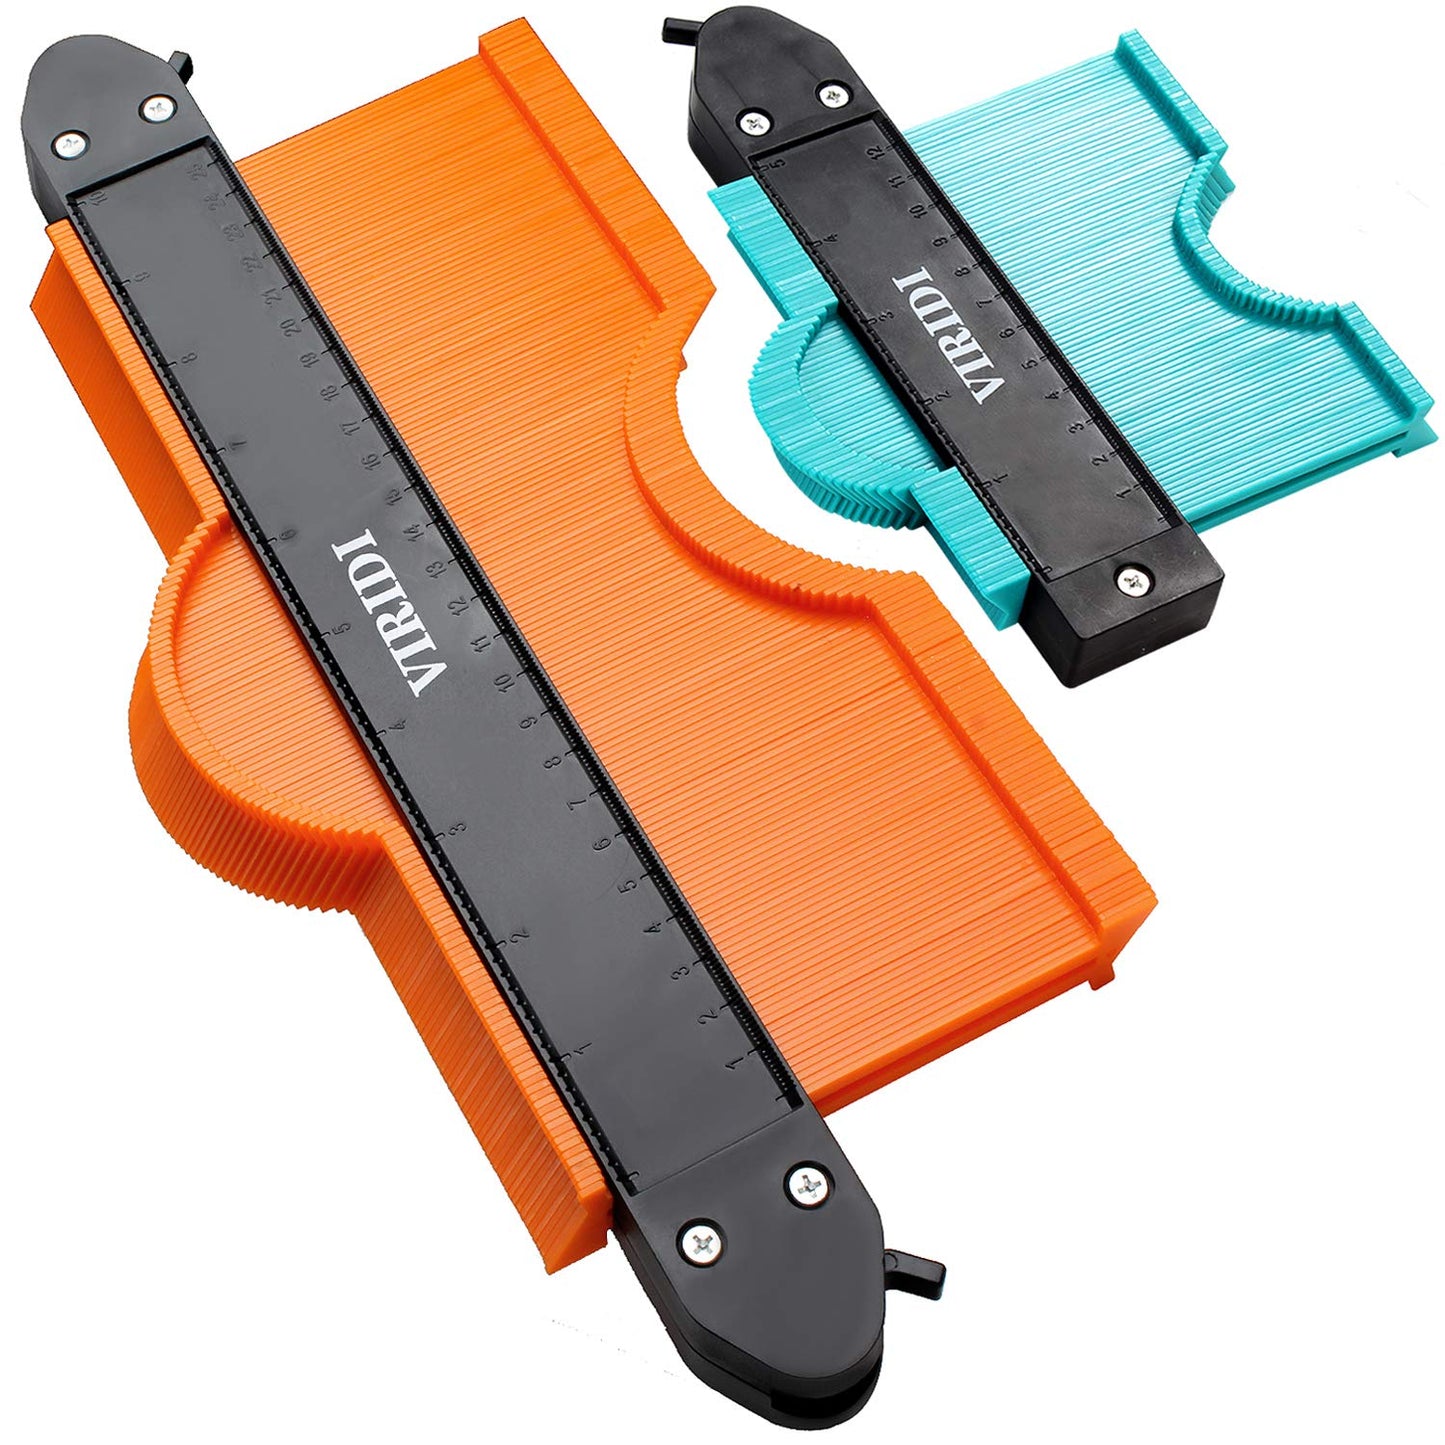 Contour Gauge with Lock, 2pcs 5&10 inch Profile Gauge Smart Measure Ruler Contour Duplicator Carpenter Tool for Vinyl Cutter Plank Install - Instant